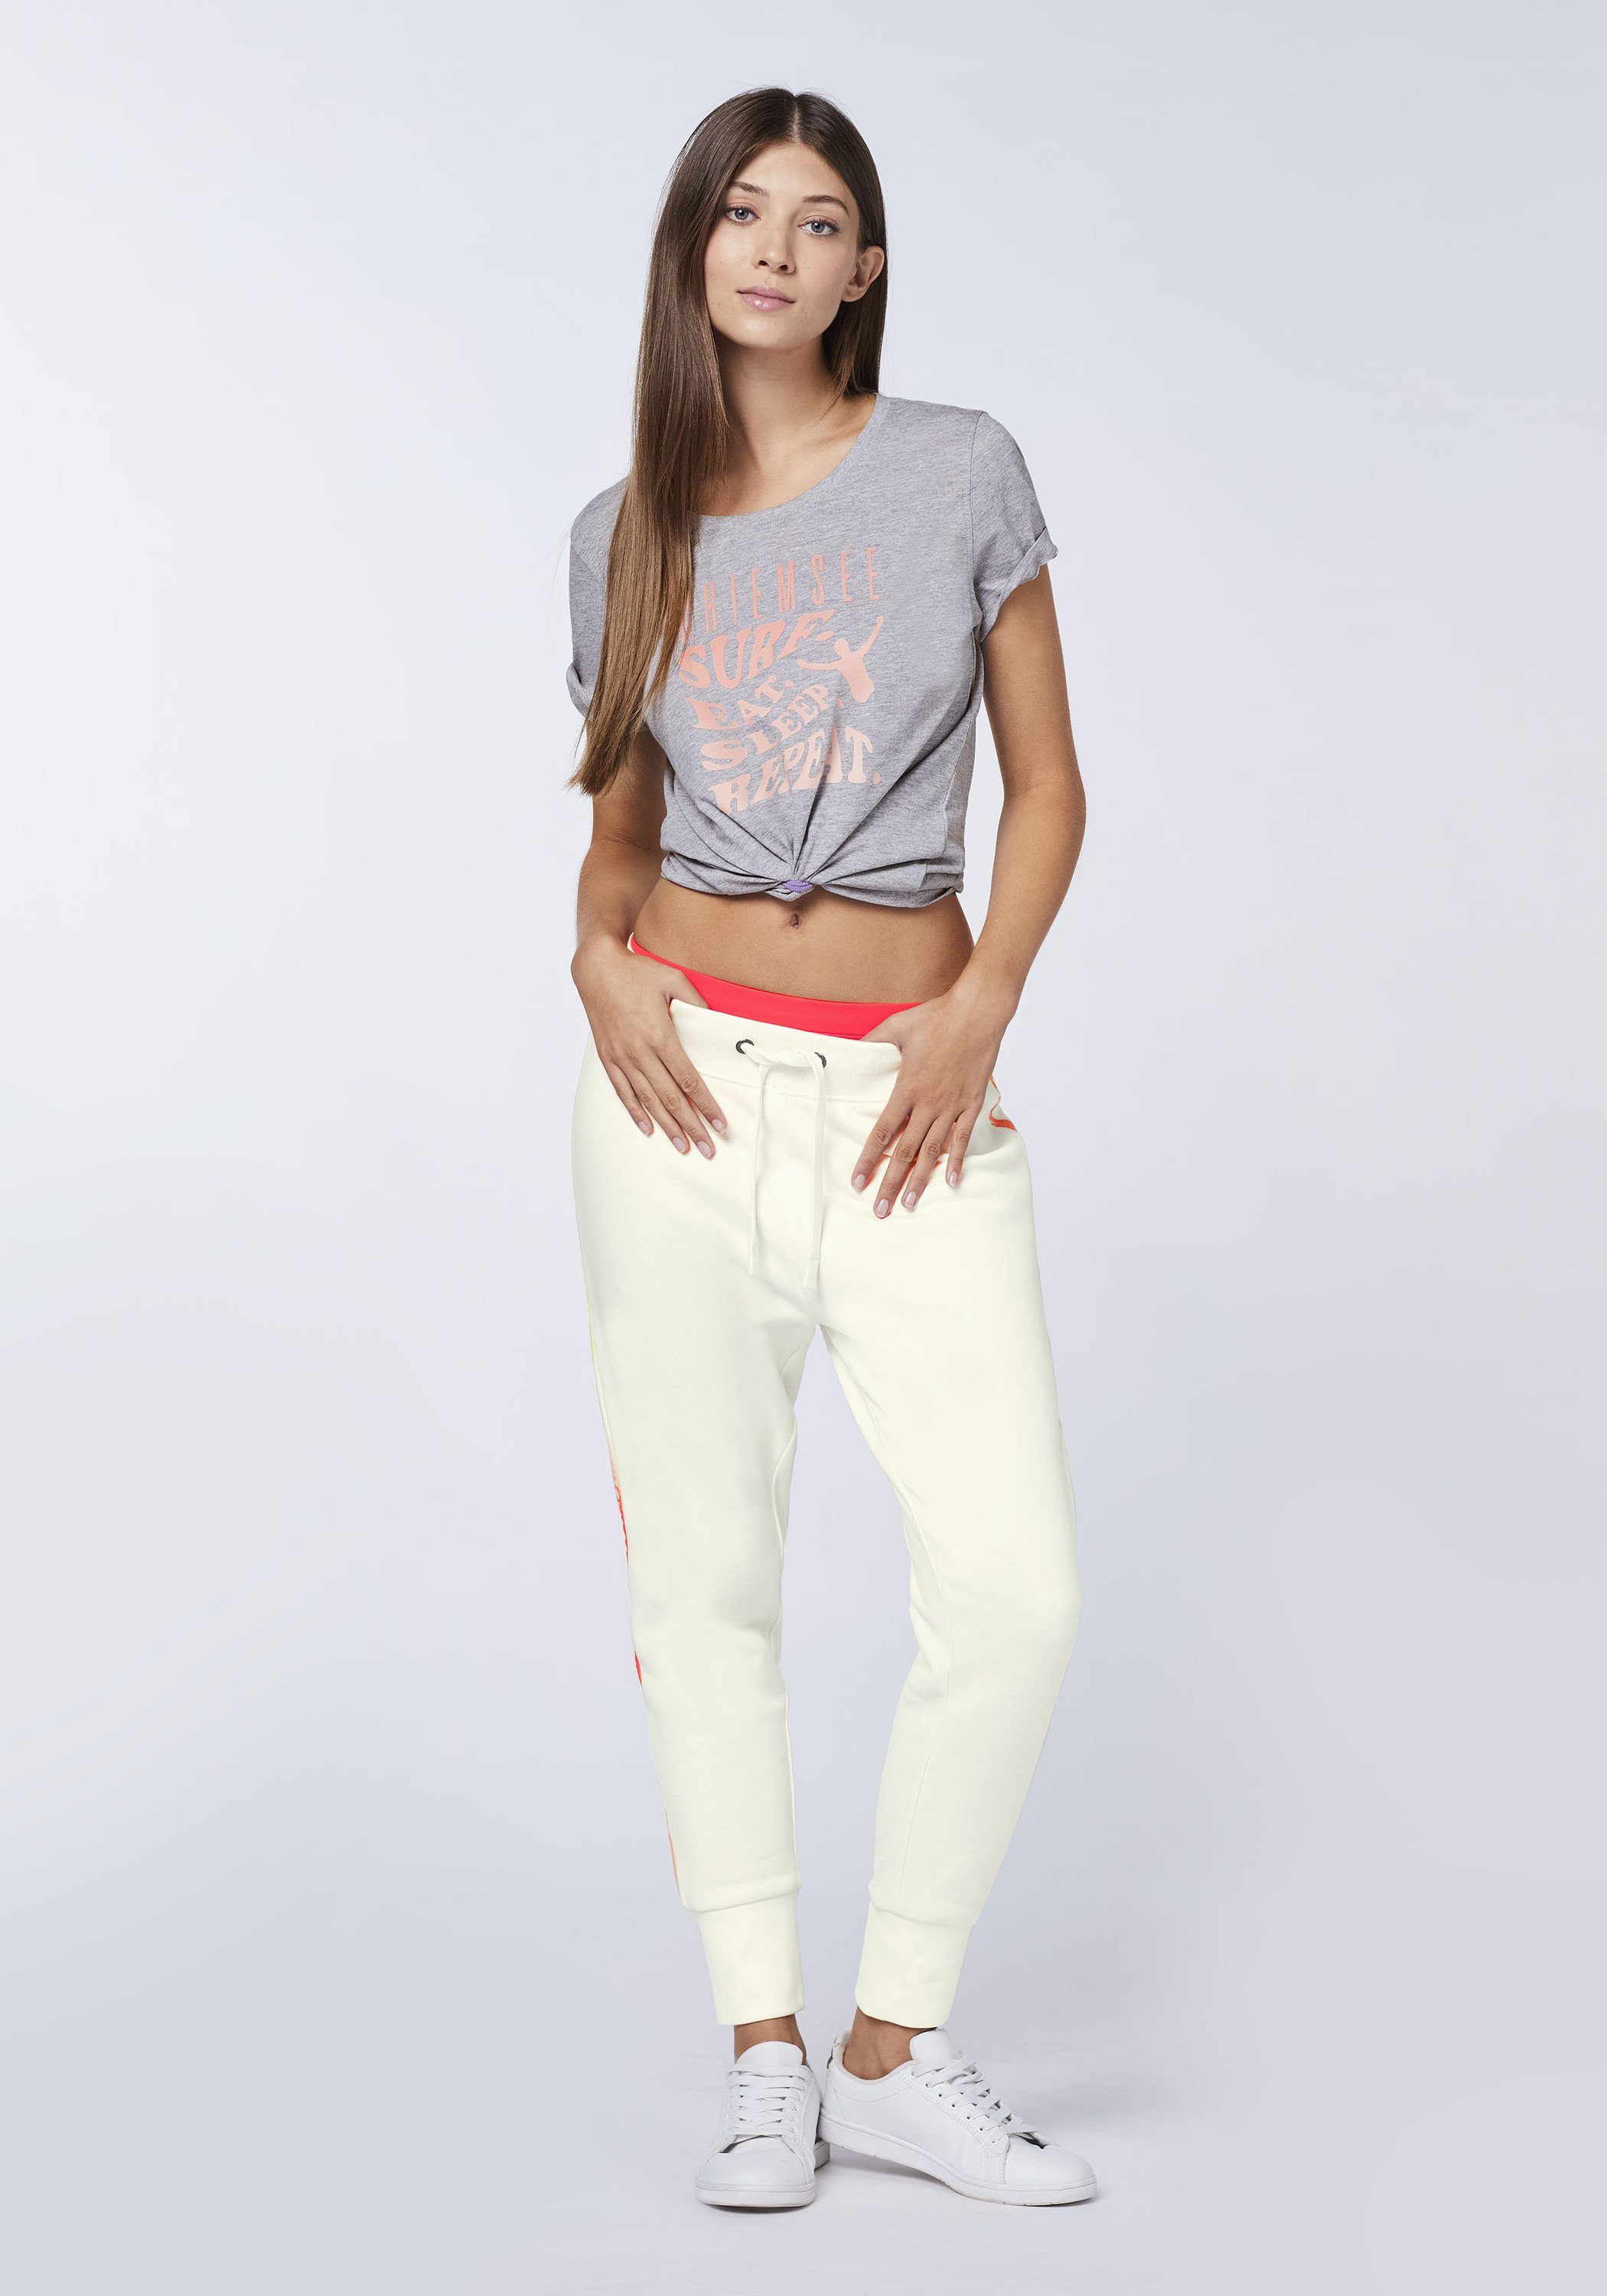 Chiemsee Gray 1 Schriftzug Print-Shirt Neutral T-Shirt mit Melange 17-4402M